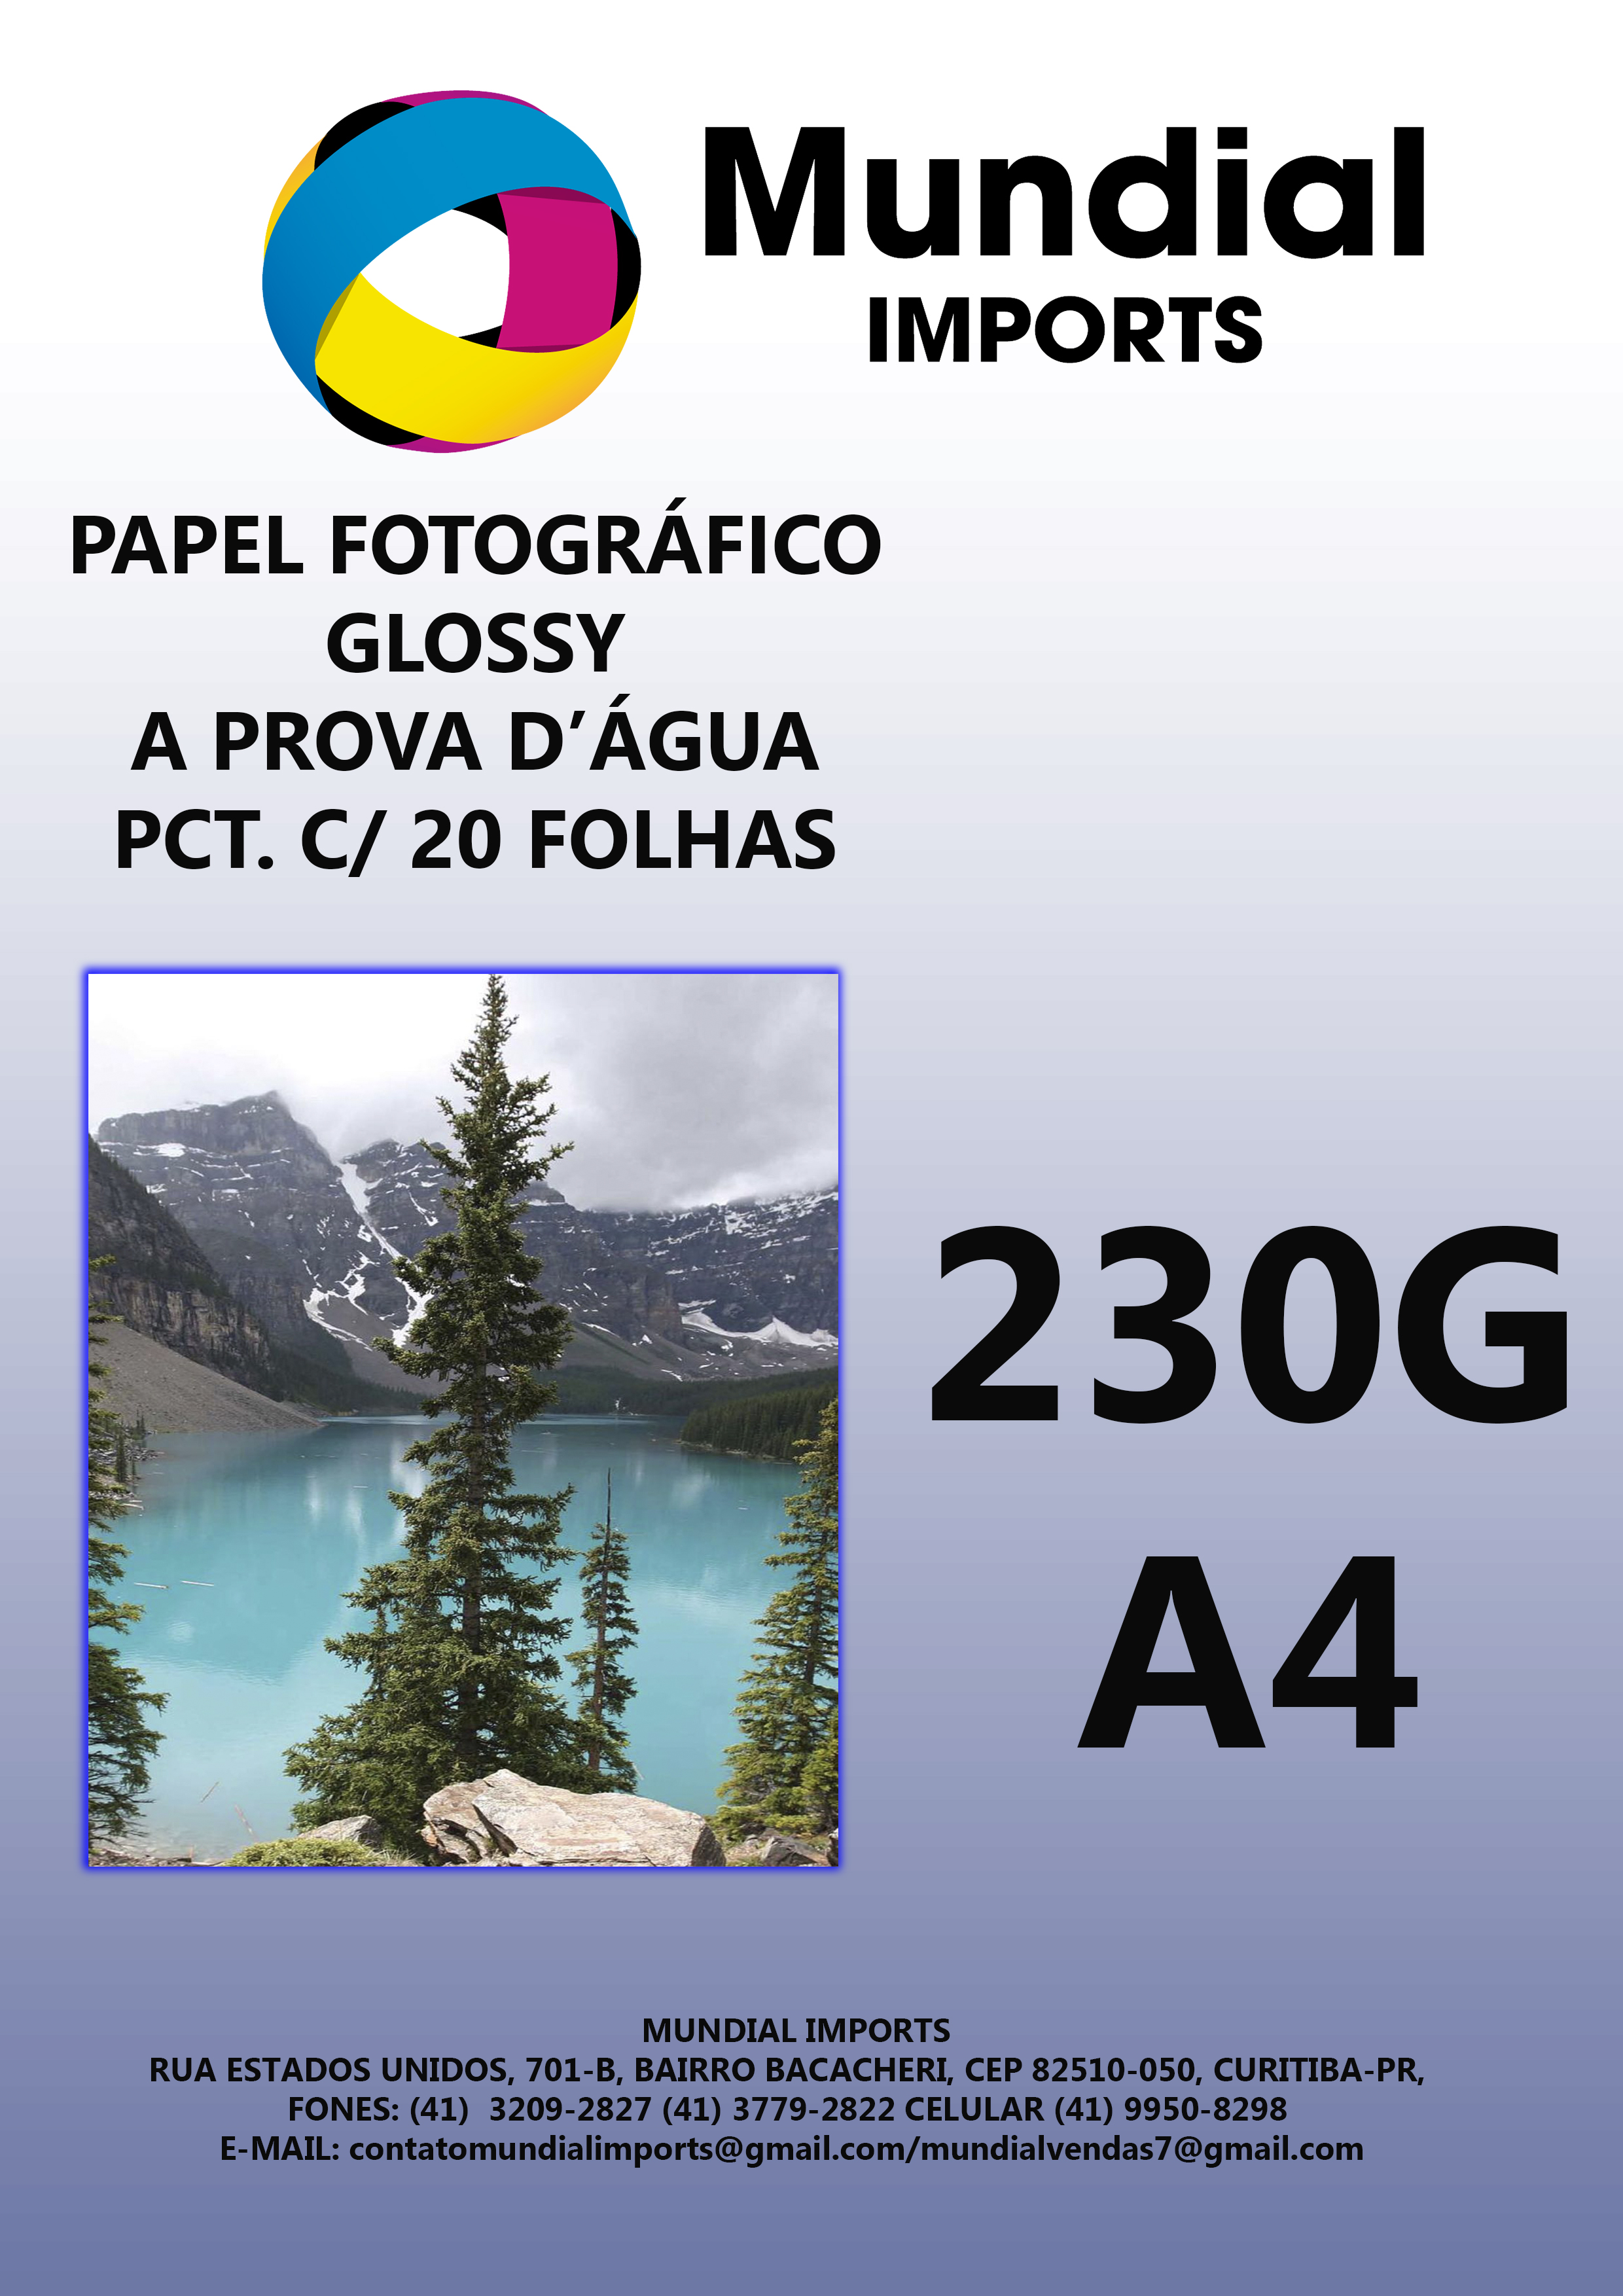 Papel Fotográfico Glossy 230g/A4 - Pacote c/20 folhas